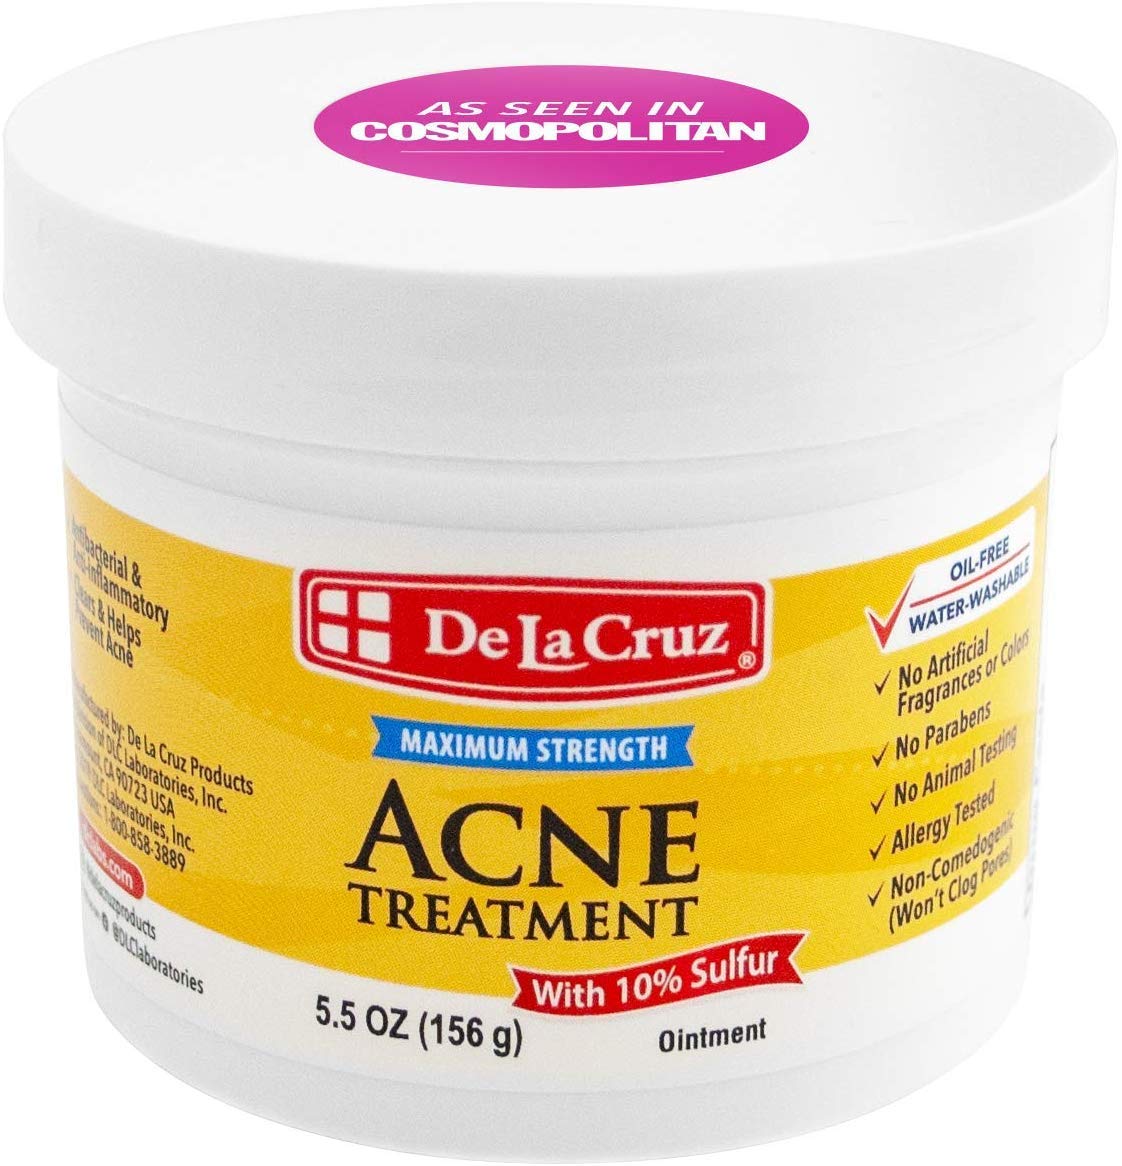  De La Cruz Sulfur Ointment - Cystic Acne Treatment - Cystic  Acne Spot Treatment for Face and Body - 2.6 OZ Tube : Beauty & Personal Care